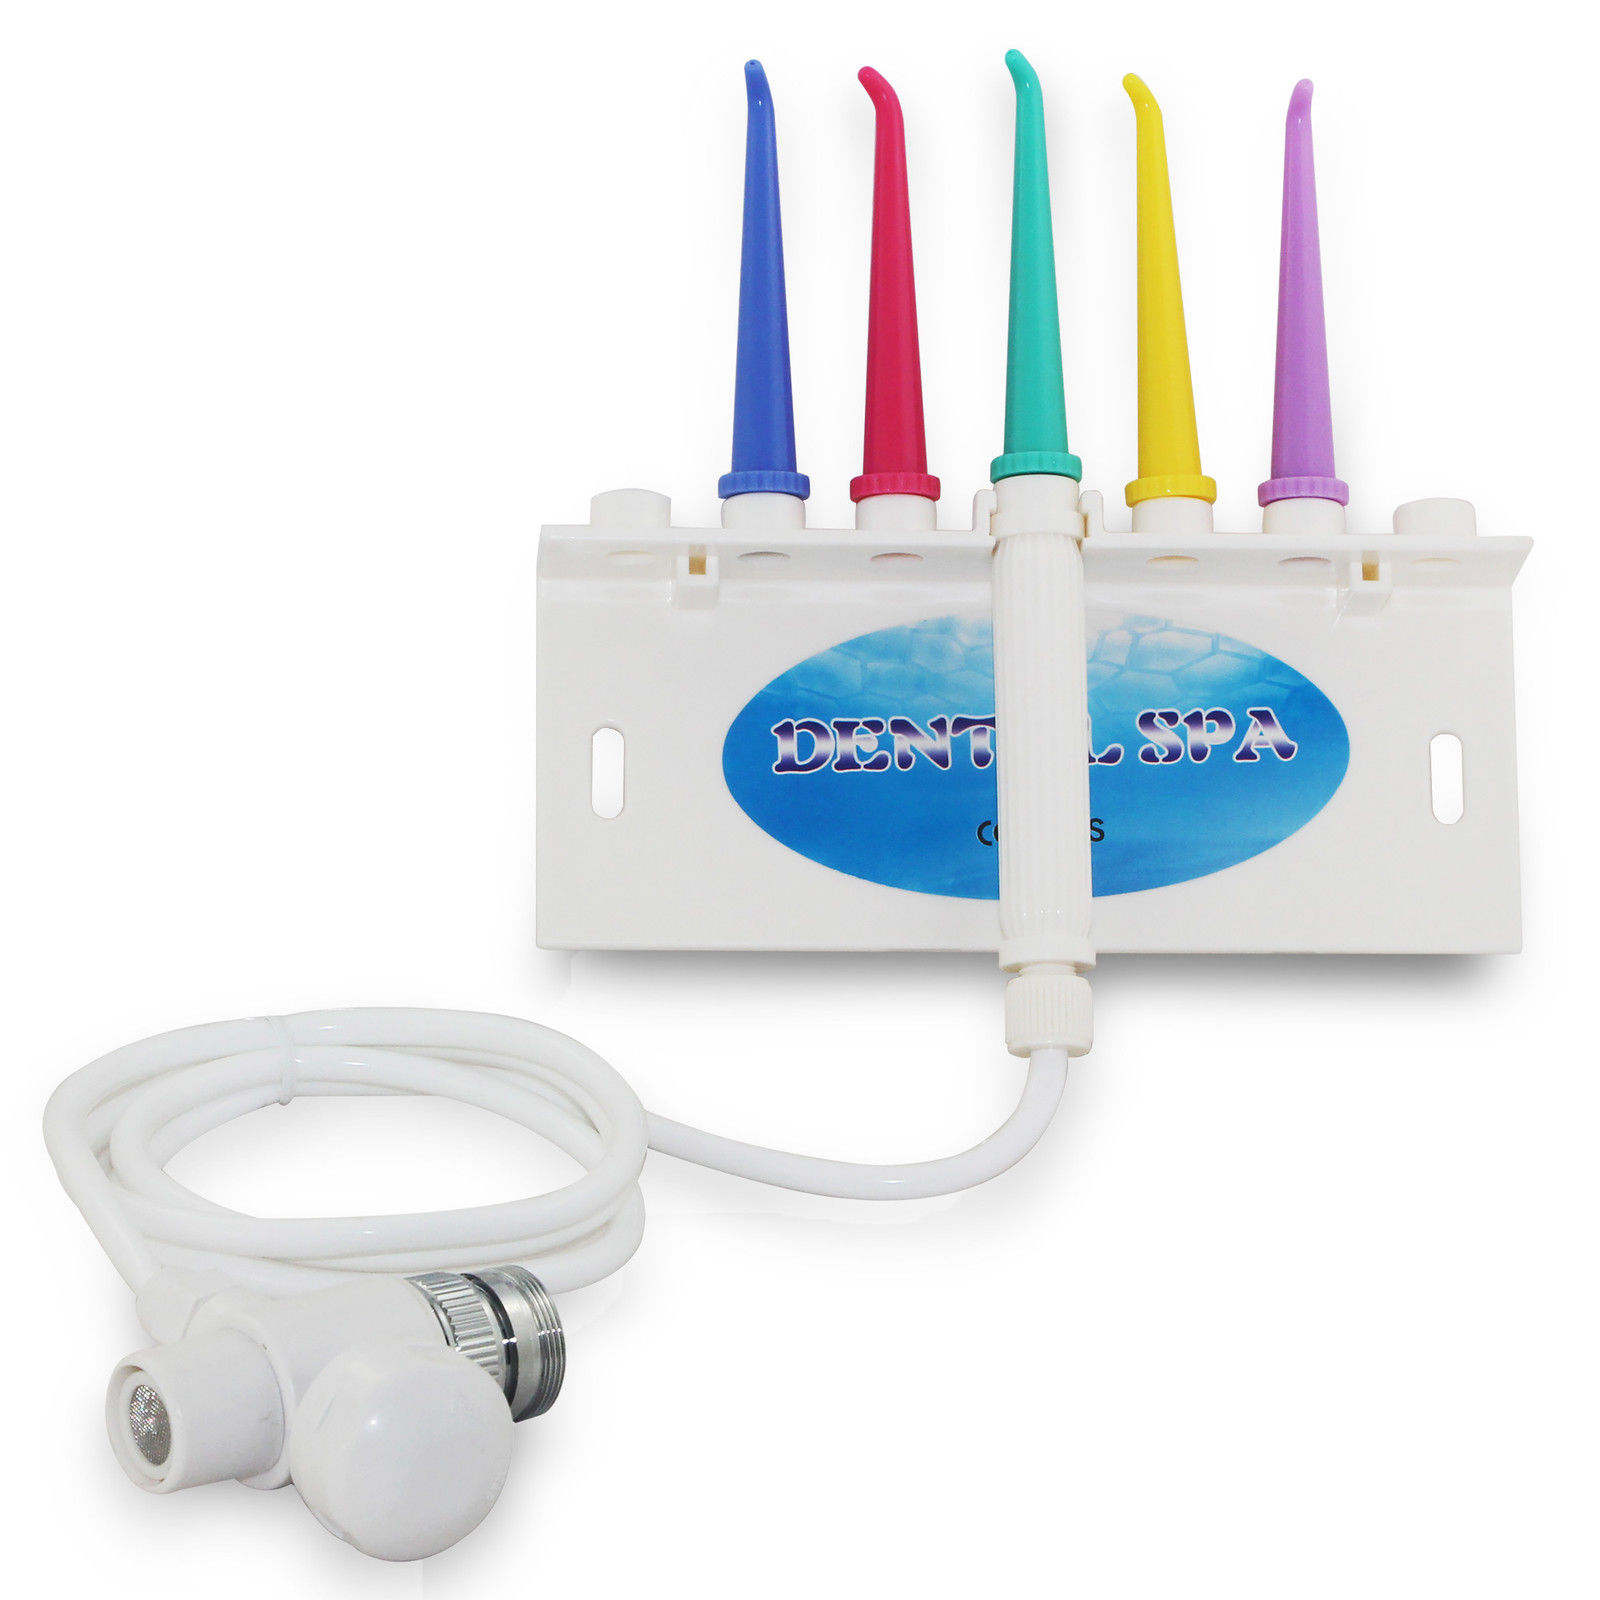 FB Faucet Water Flosser Oral Irrigator Dental Flosser Dental SPA Floss Water Jet Pick Water Dental Pick Oral Irrigation Pic